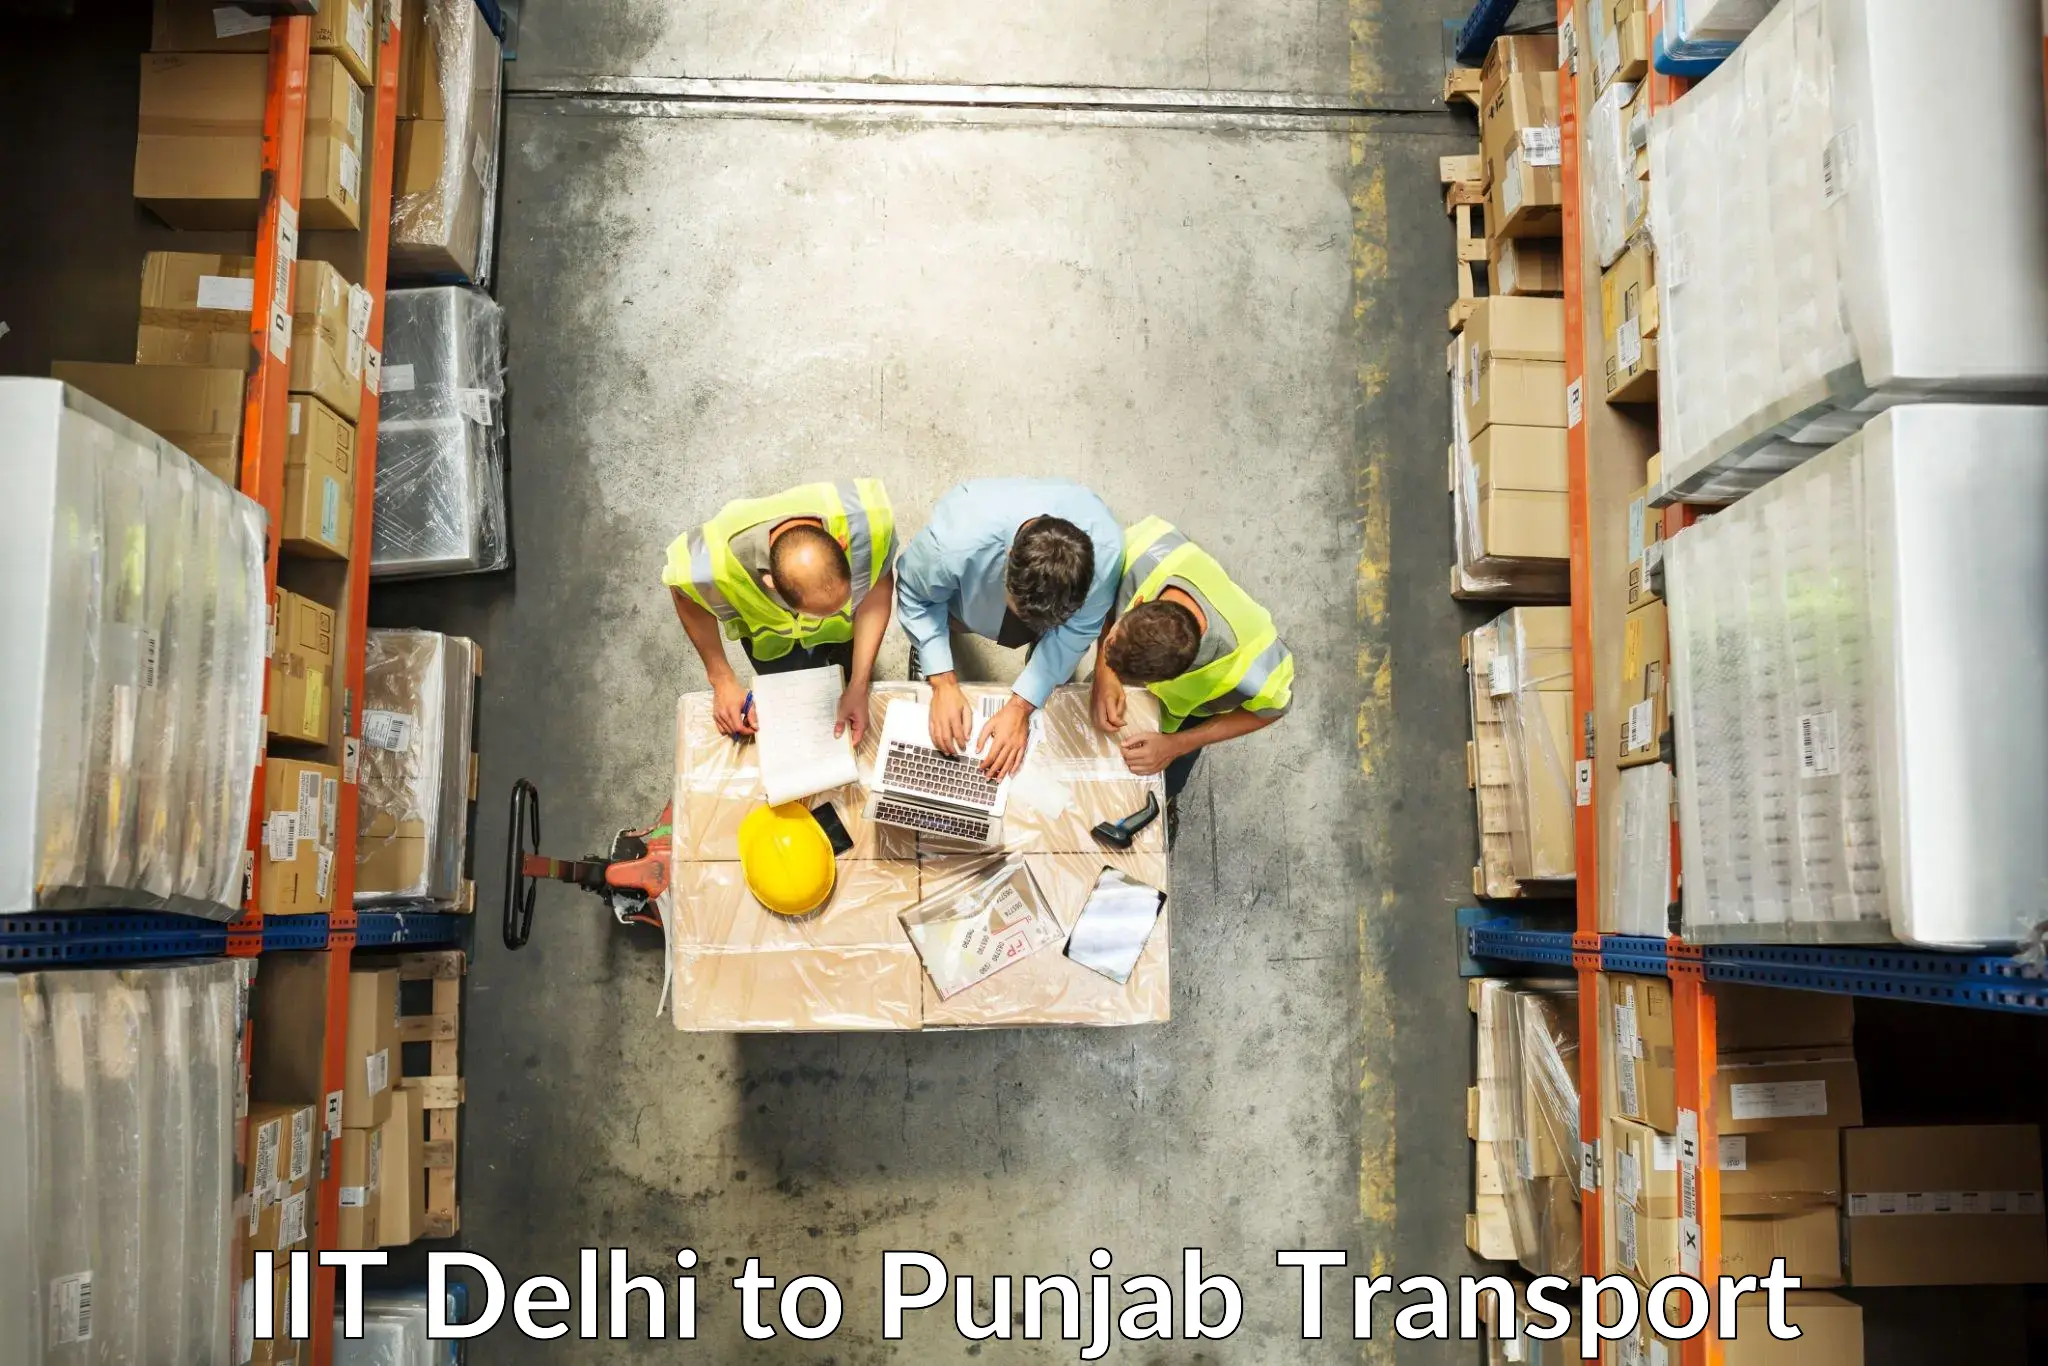 Bike shipping service IIT Delhi to Punjab